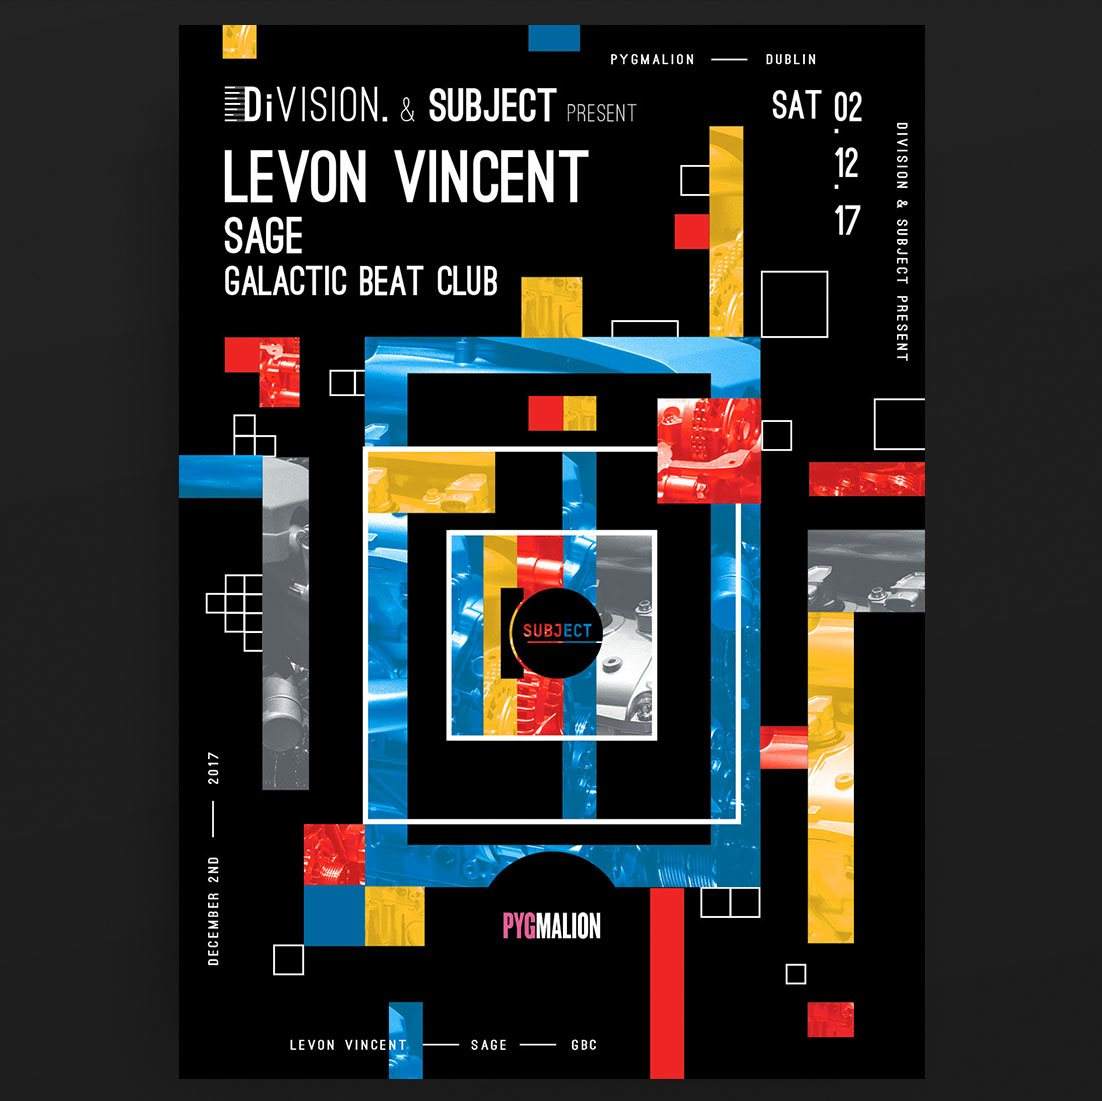 Division & Subject present Levon Vincent - Página frontal